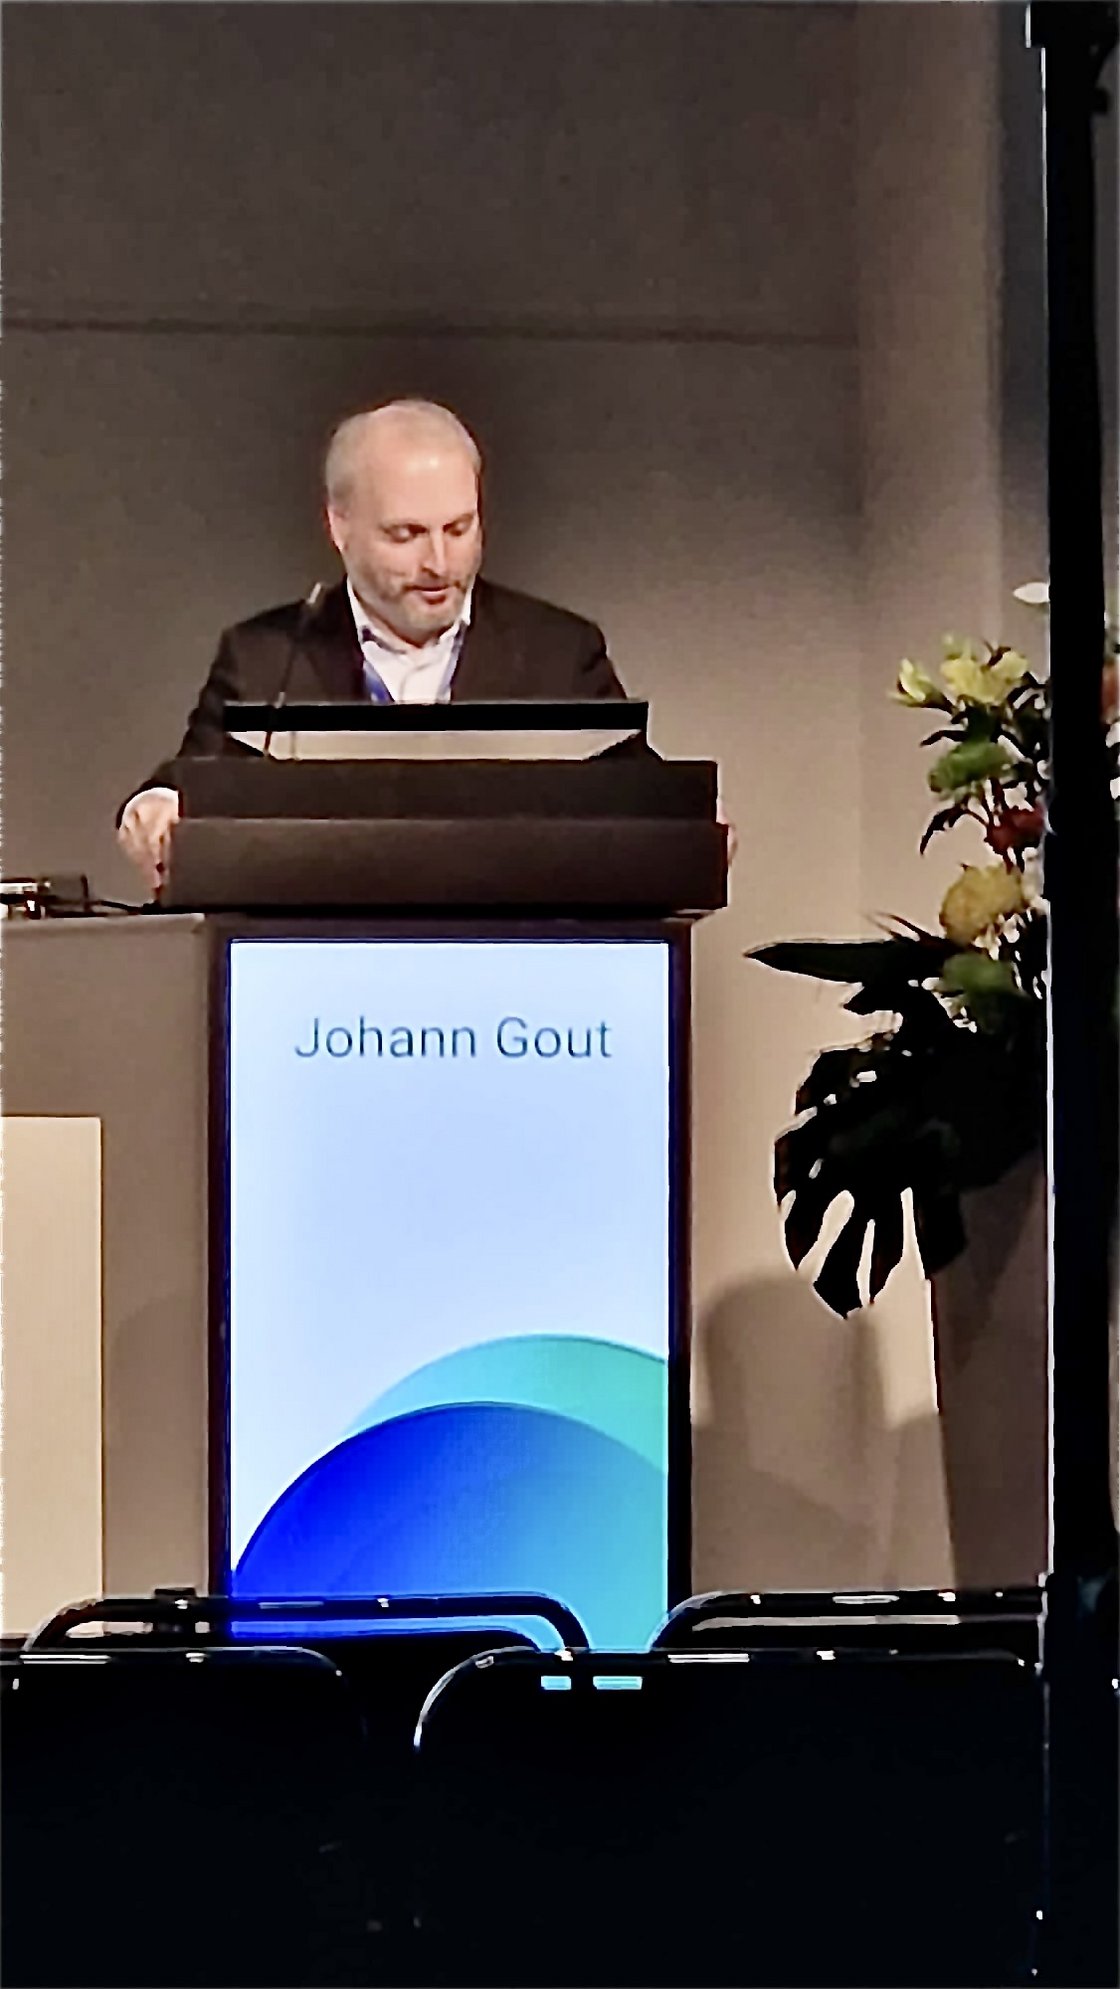 Johann Gout presenting at DKK Berlin 